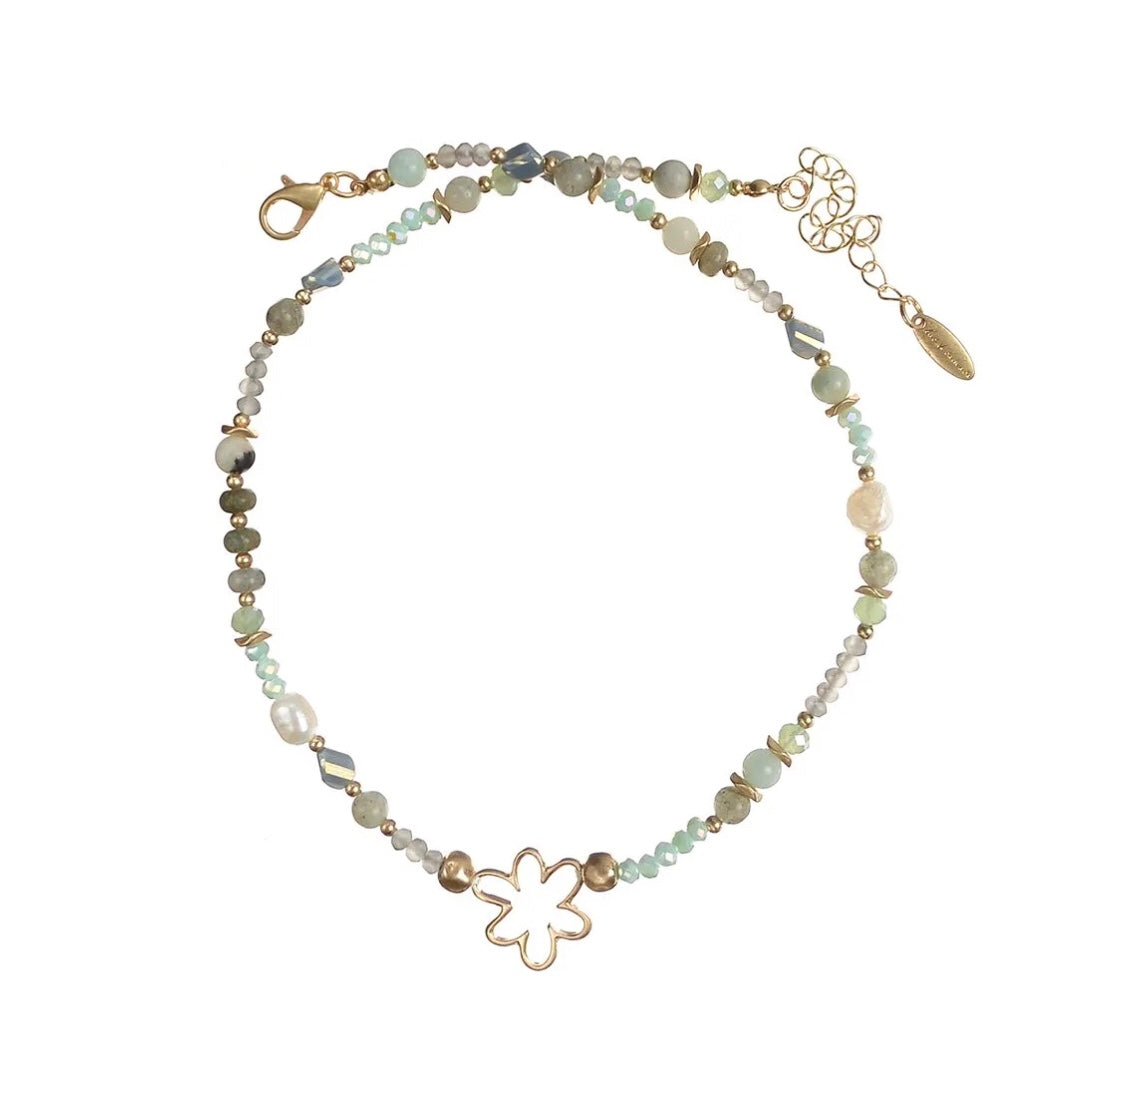 Aqua stone and pearl necklace